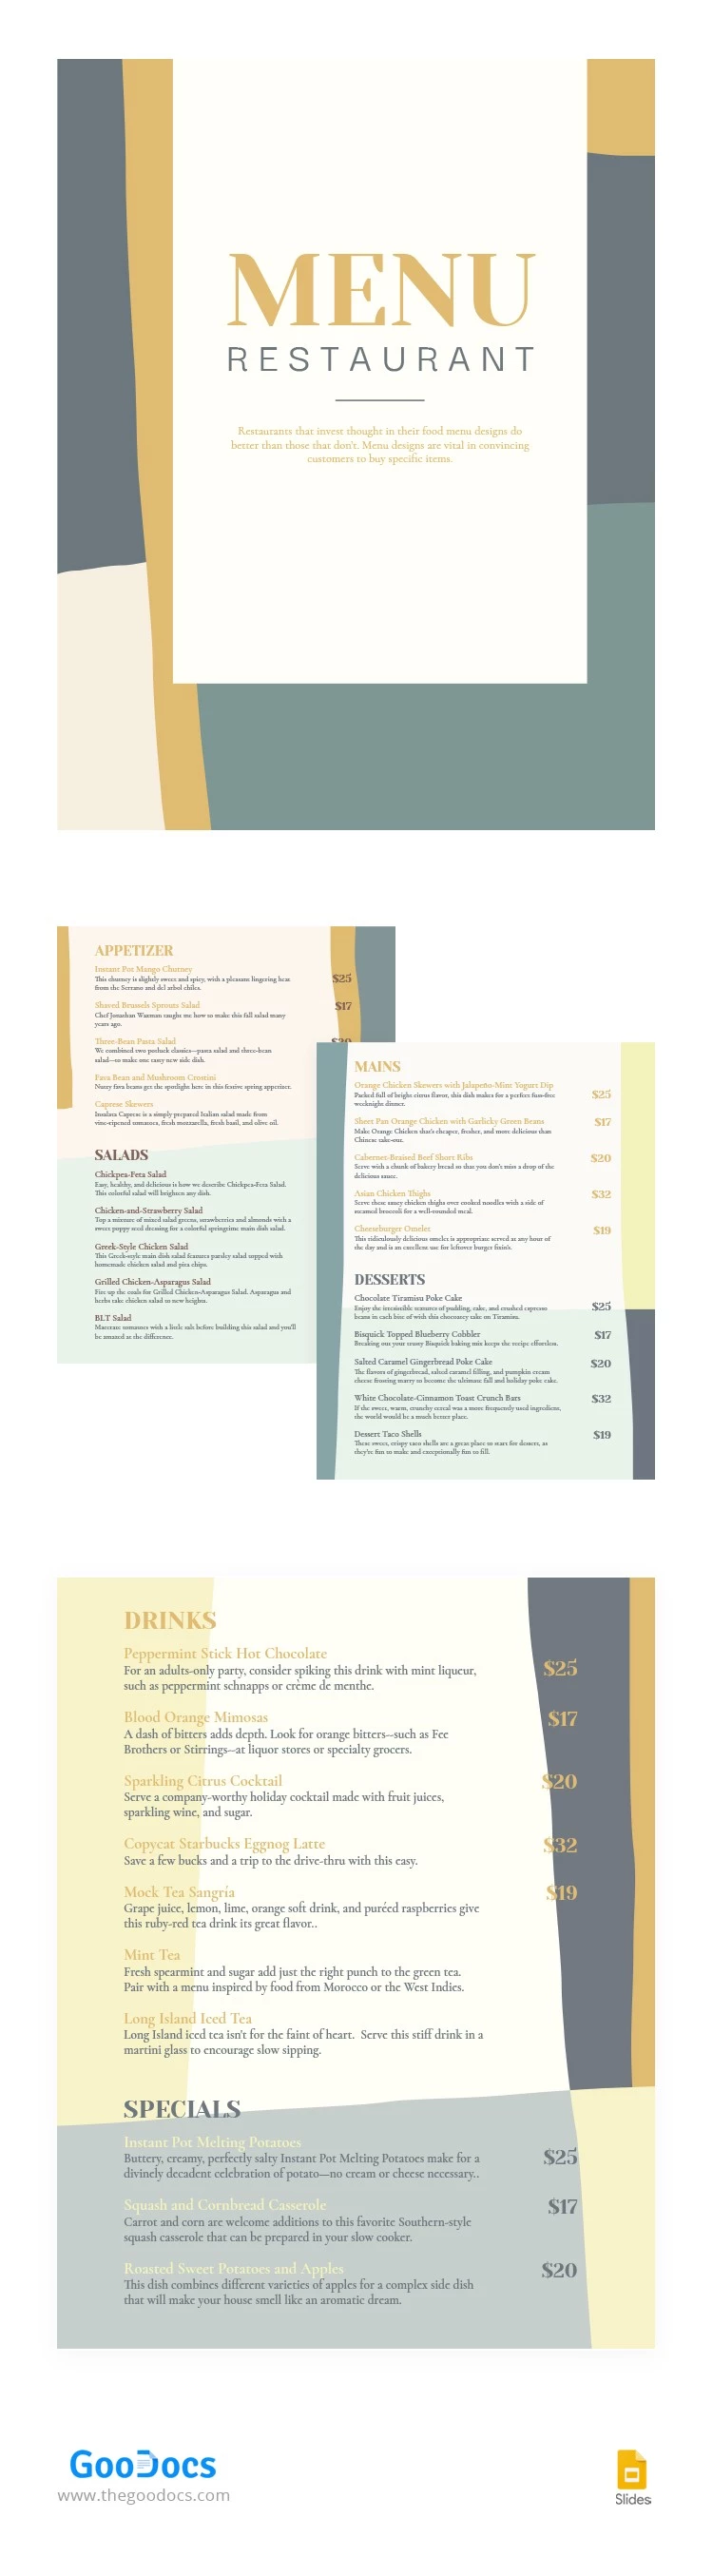 Attraente menu del ristorante - free Google Docs Template - 10063868